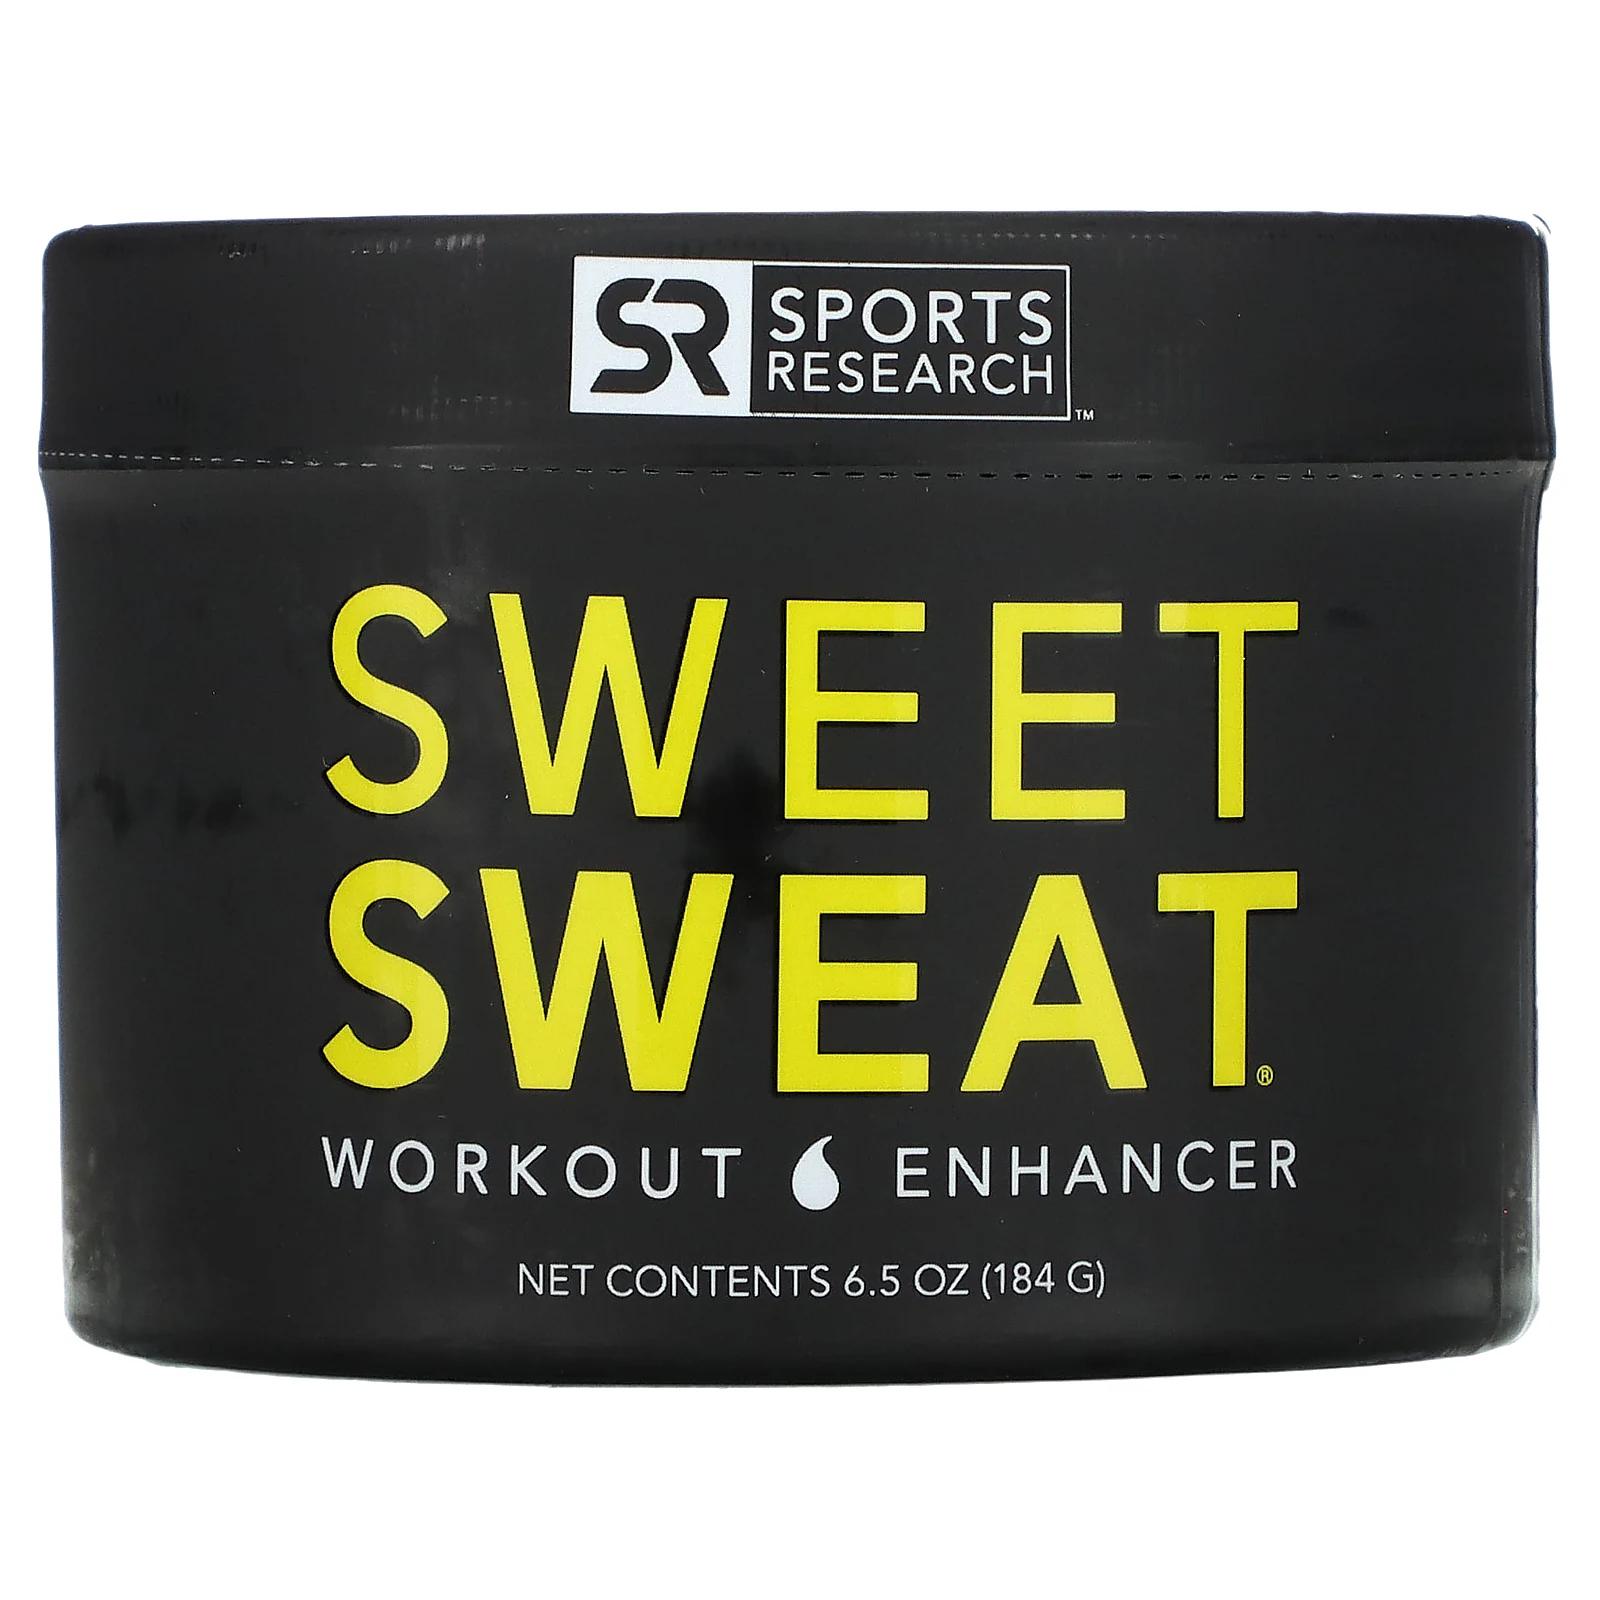 Sports Research Sweet Sweat добавка для повышения эффективности тренировок 184 г (6,5 унции) цена и фото